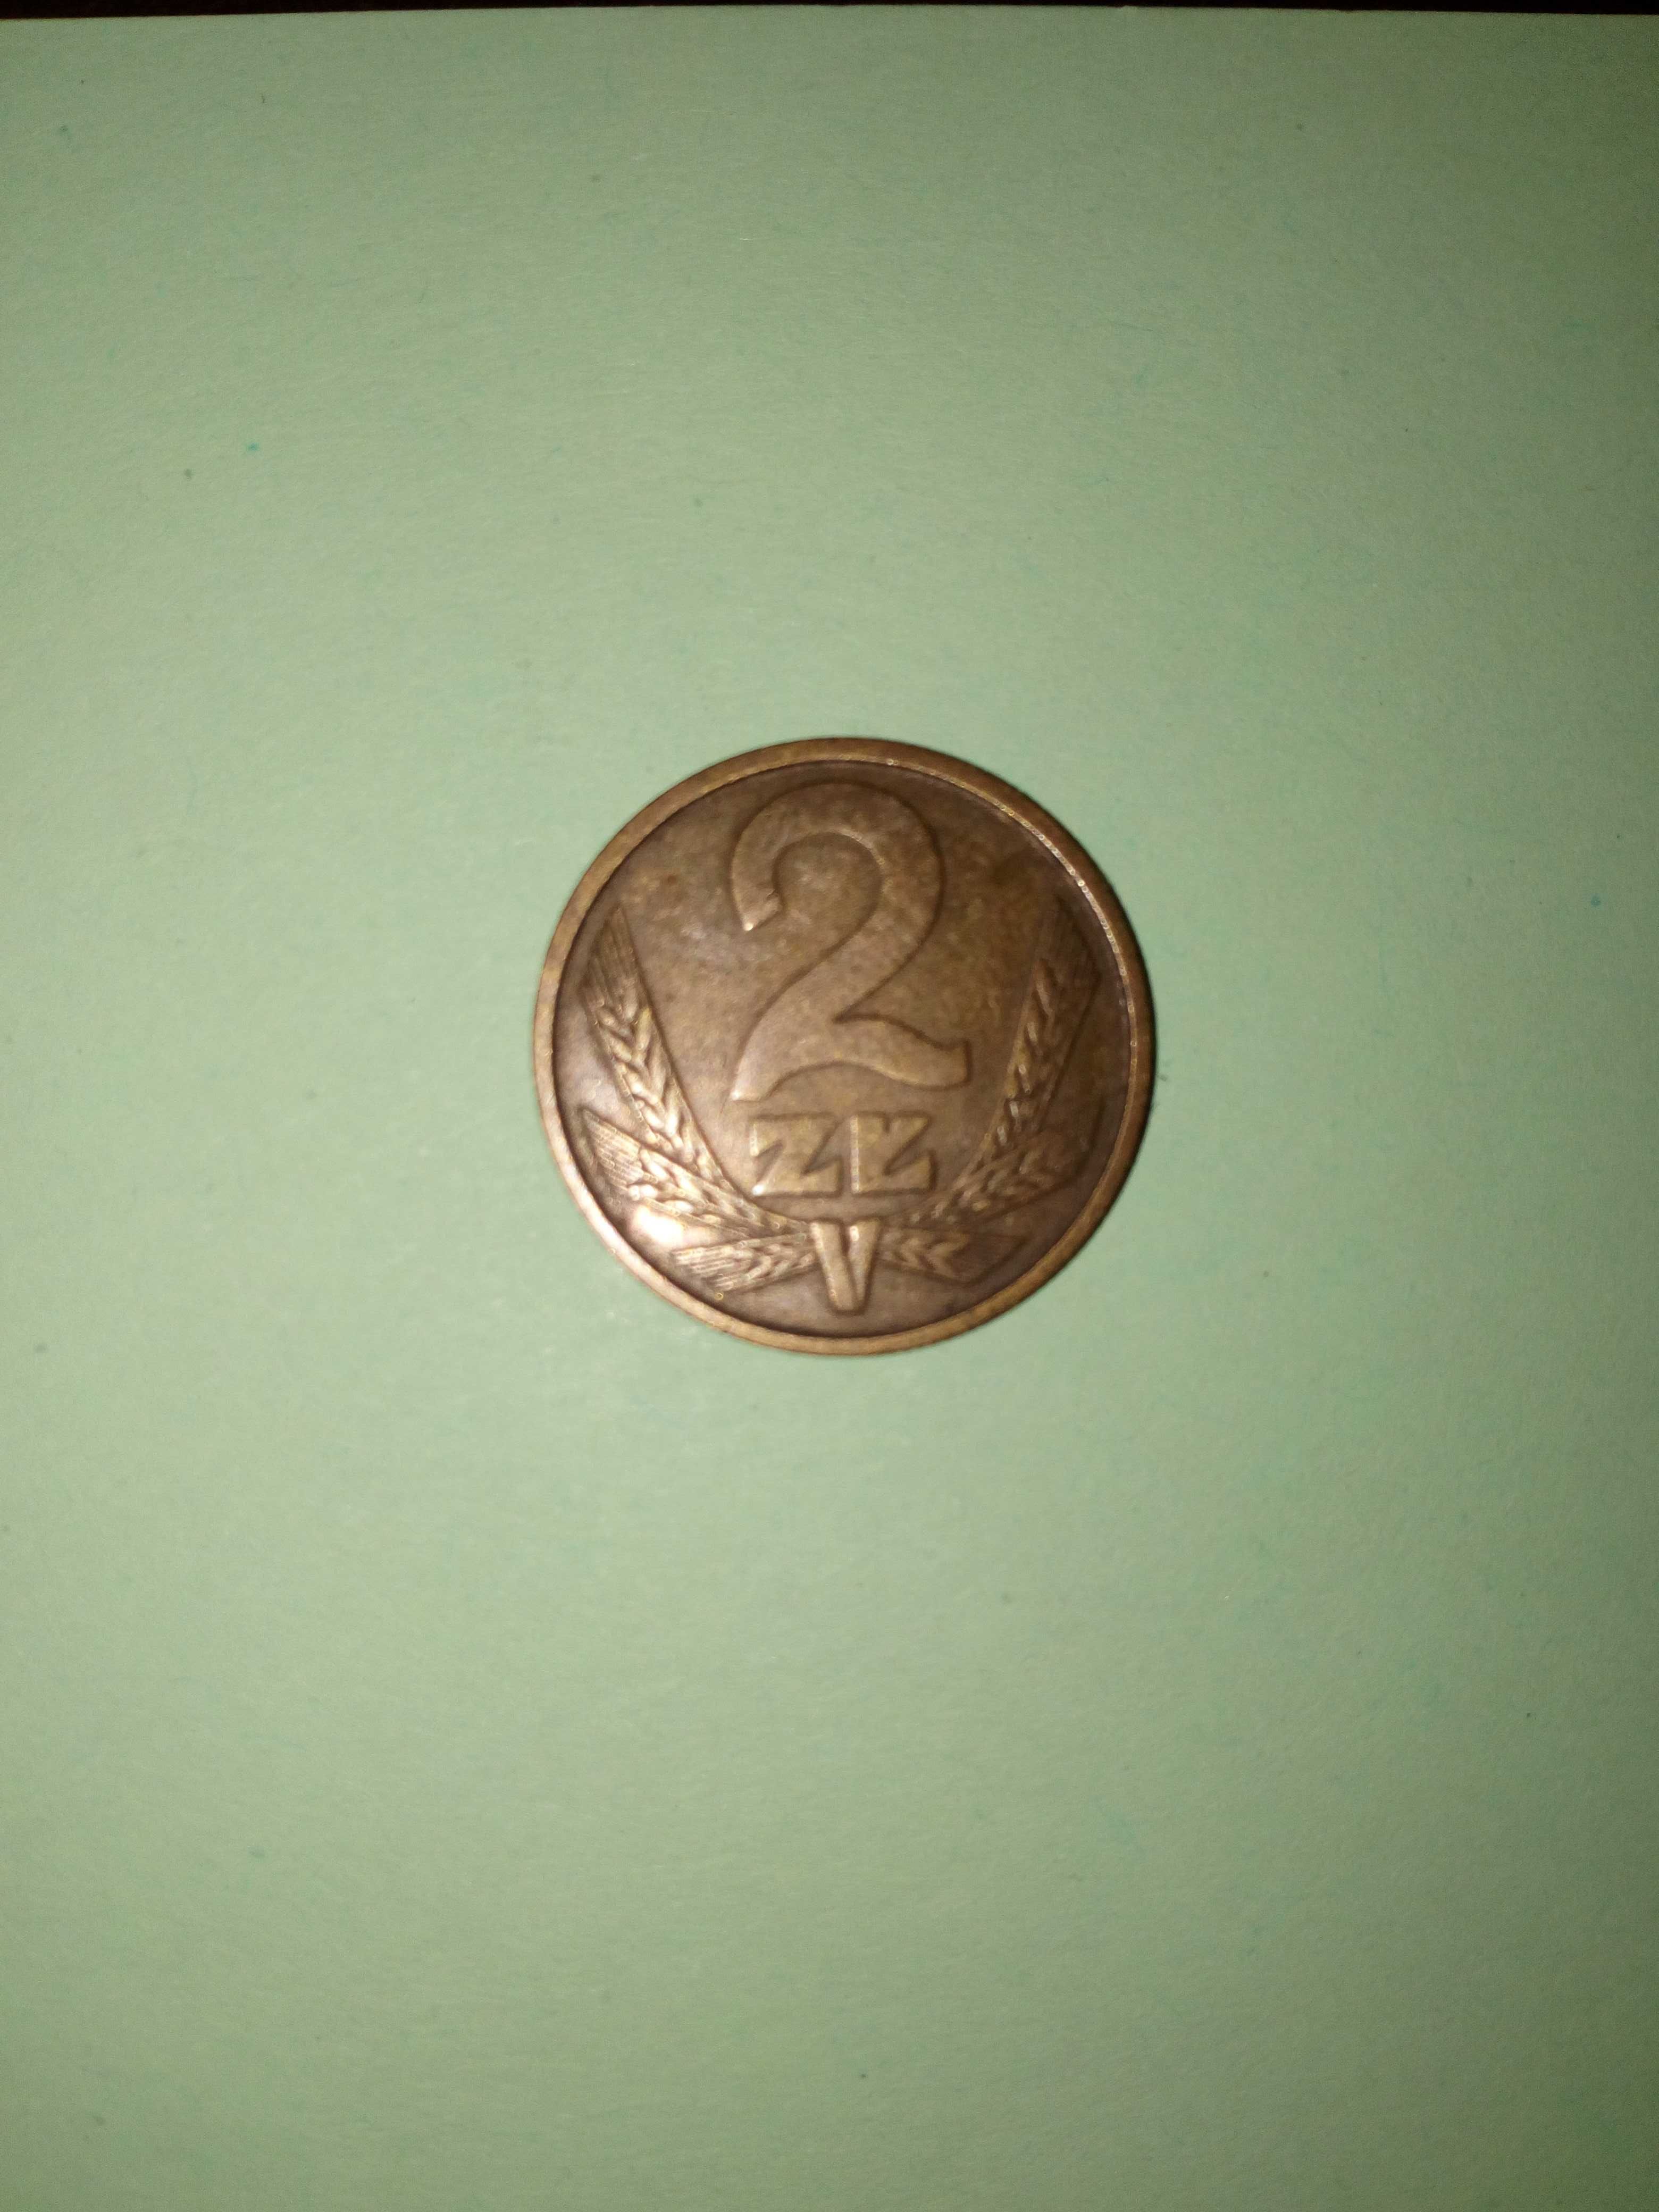 Moneta 2zł z 1979r.